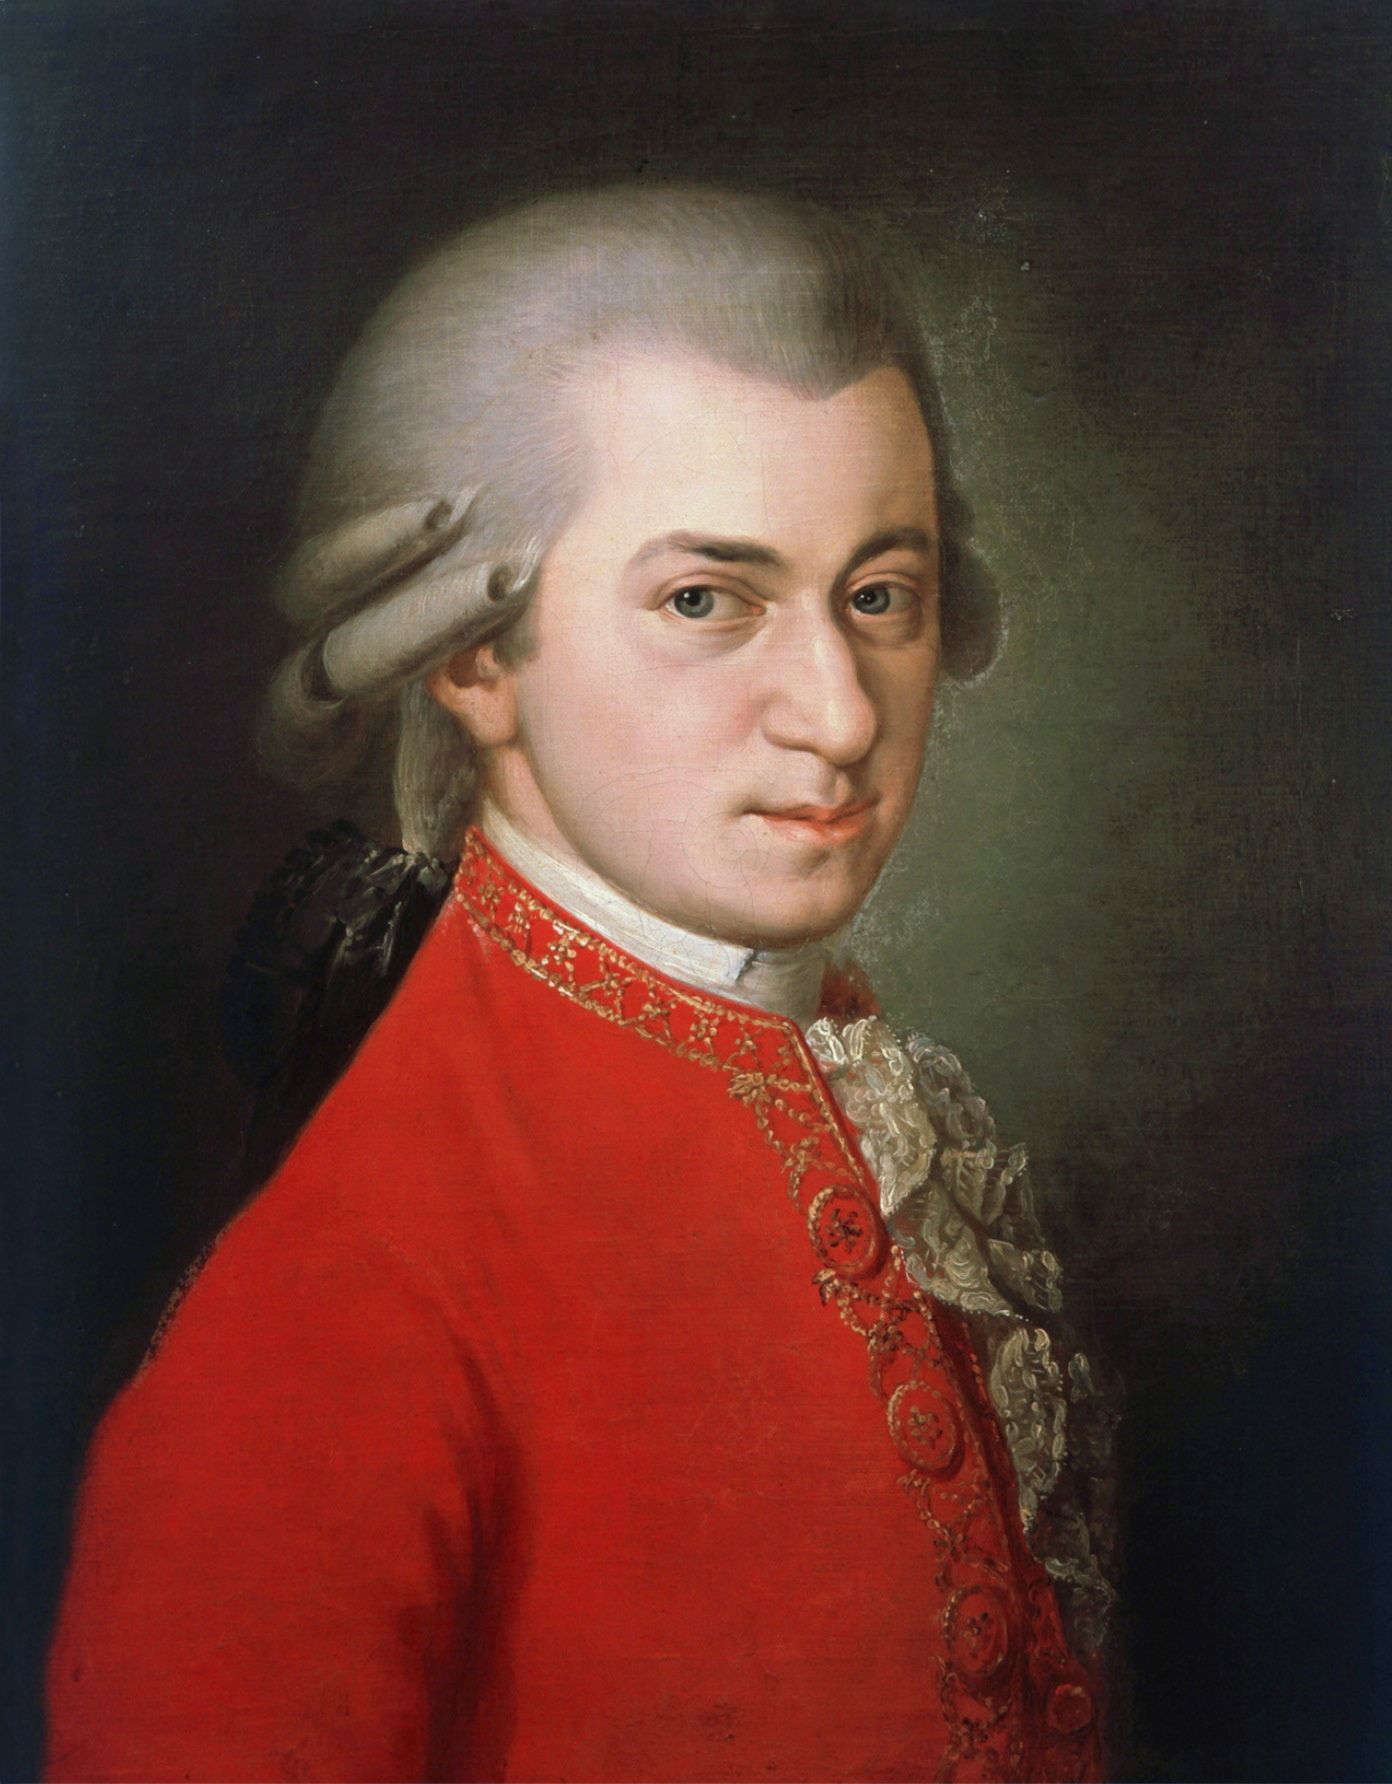 Mozart: Minuet in F Major, K 2